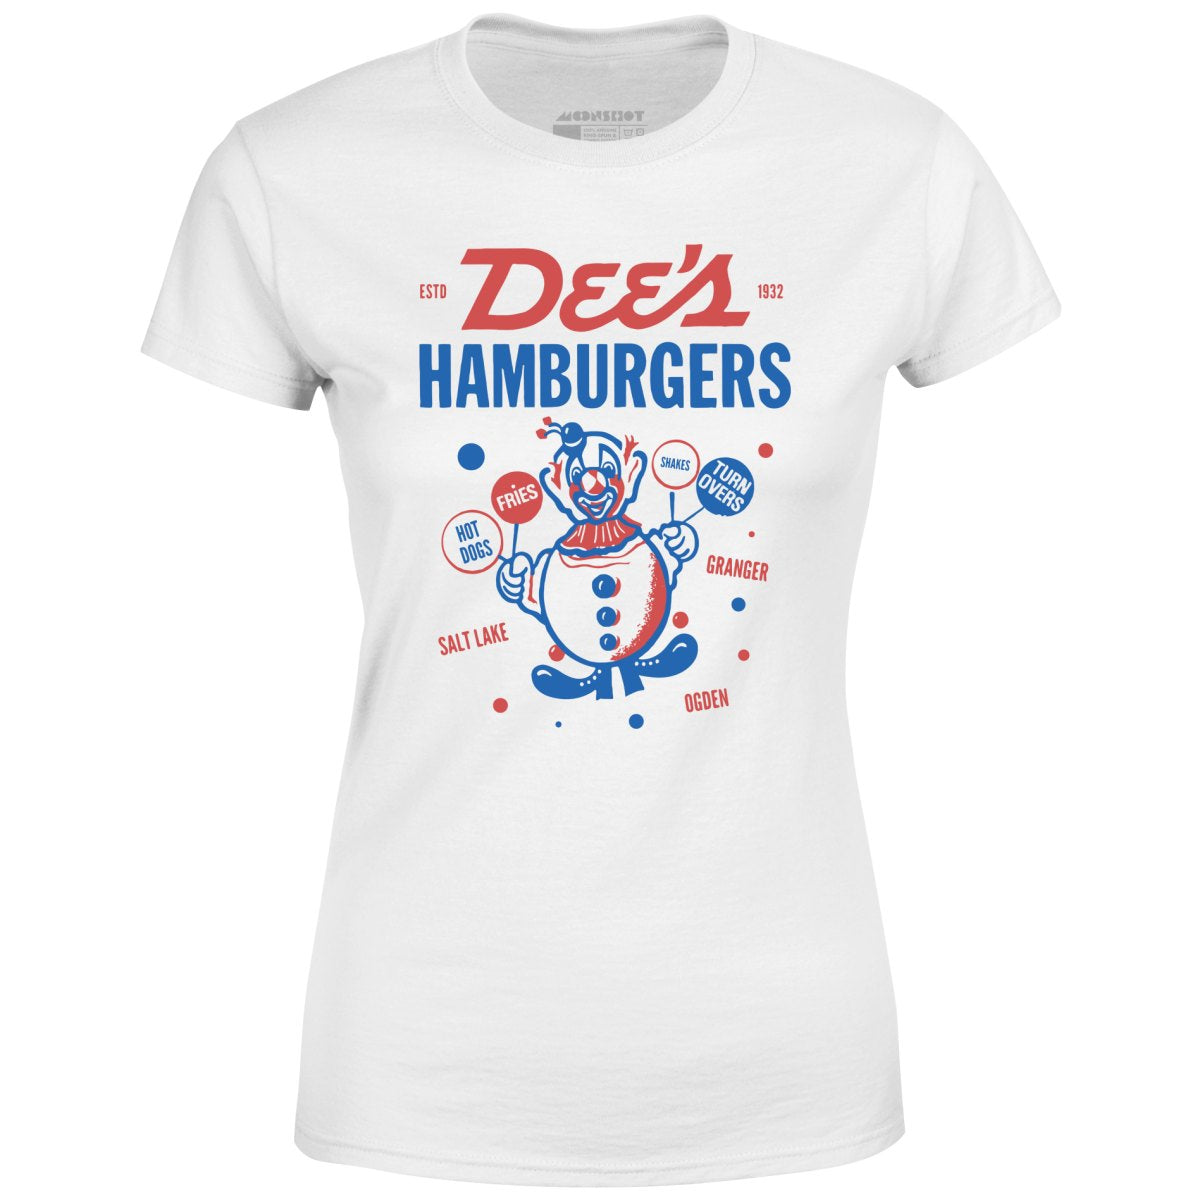 Dee's Hamburgers - Salt Lake City, UT - Vintage Restaurant - Women's T-Shirt